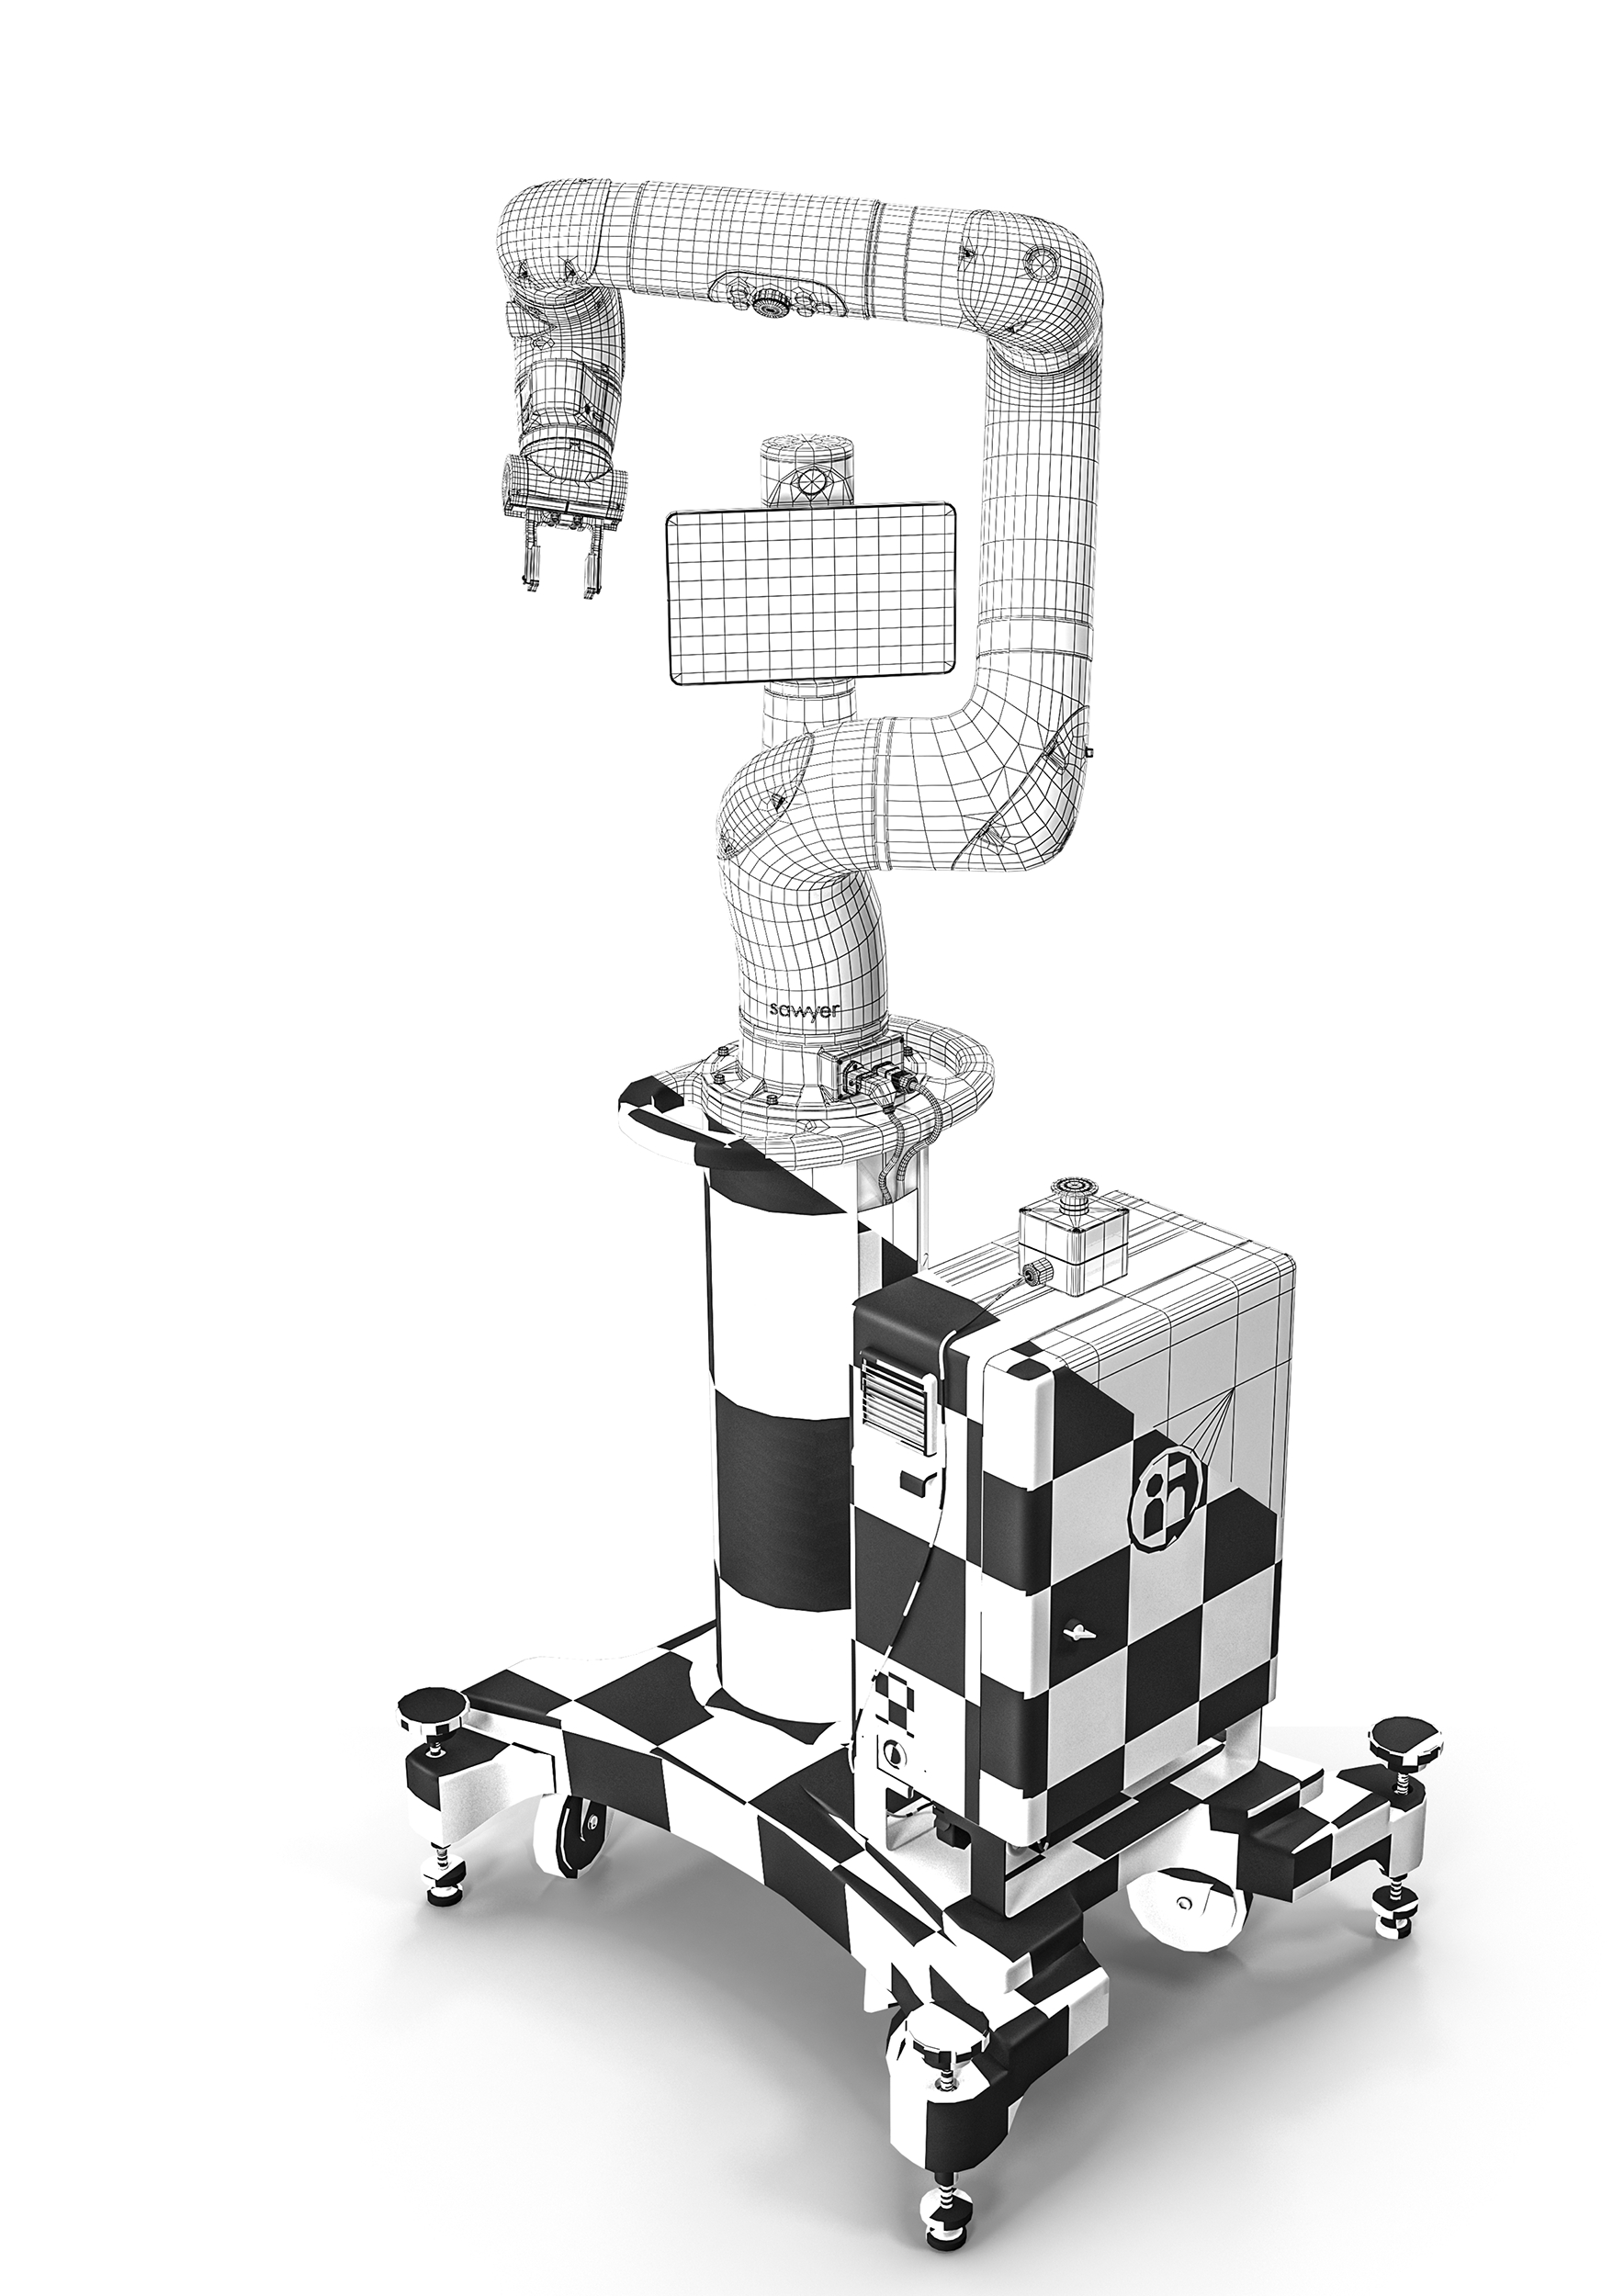 Robot industriel SAWYER dans Cinema 4d vray 5.0 image